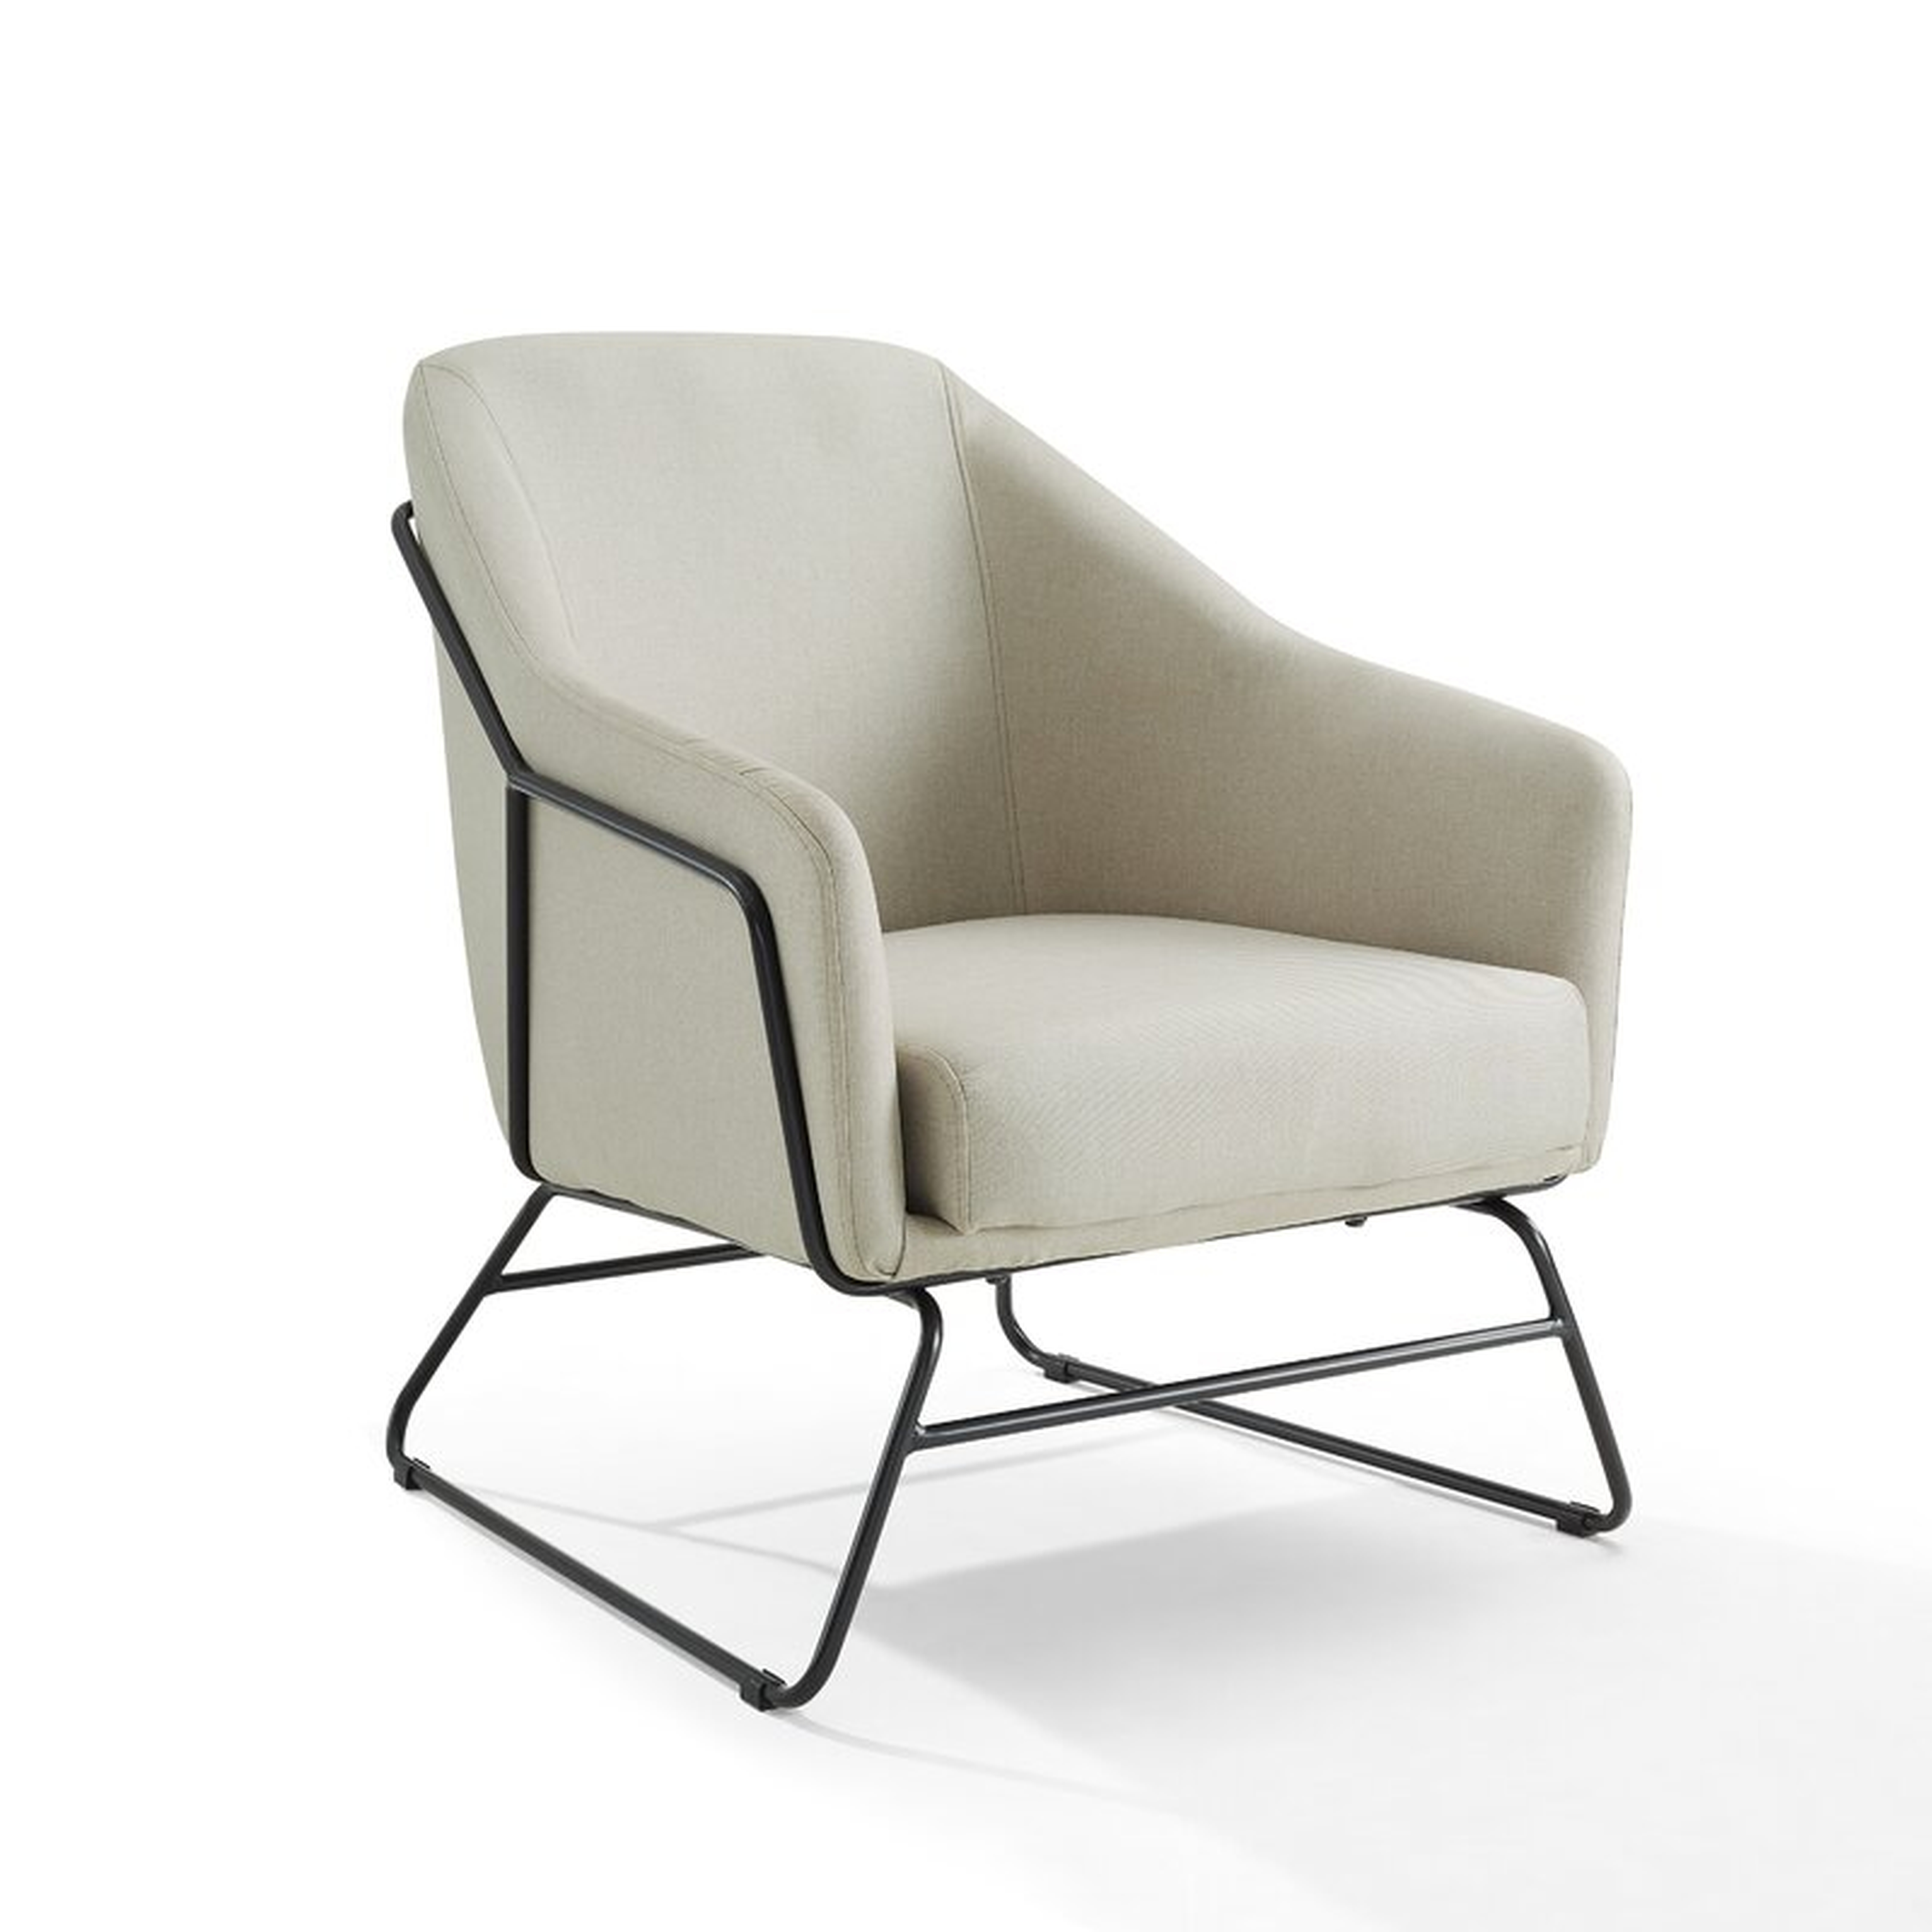 Crosley Marley Accent Chair, Beige Linen Blend - Perigold